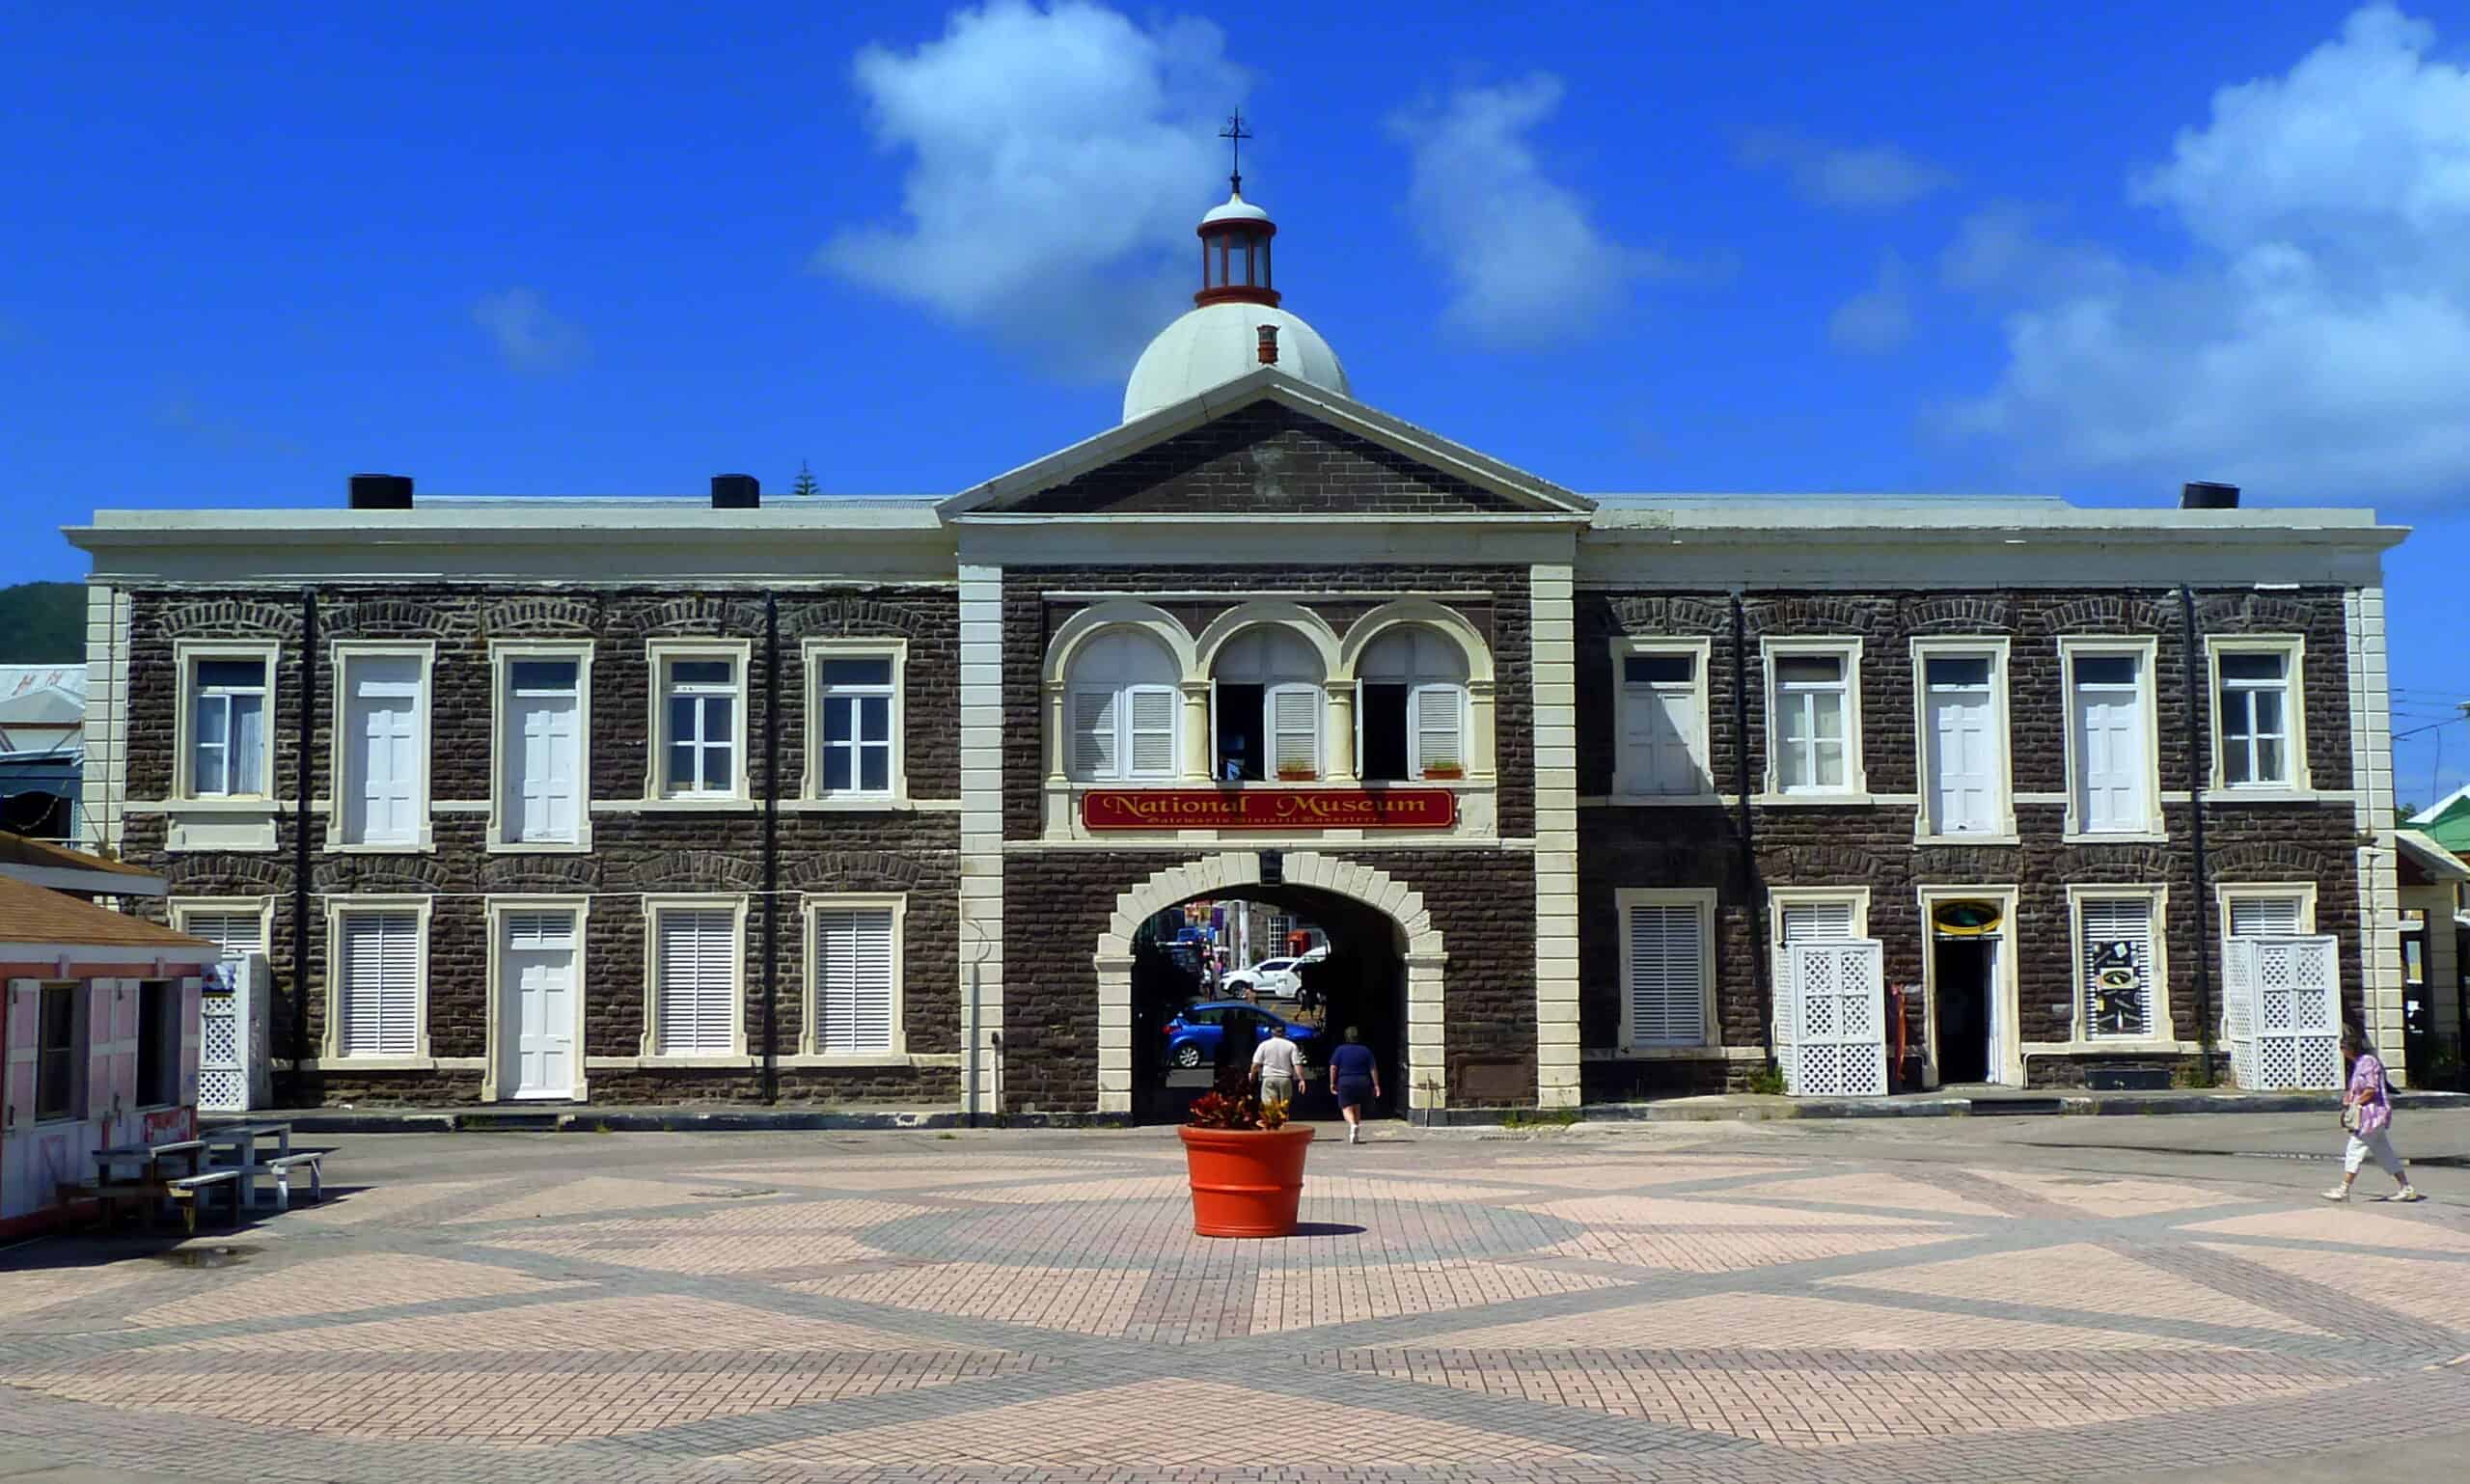 National museum of St Kitts & Nevis